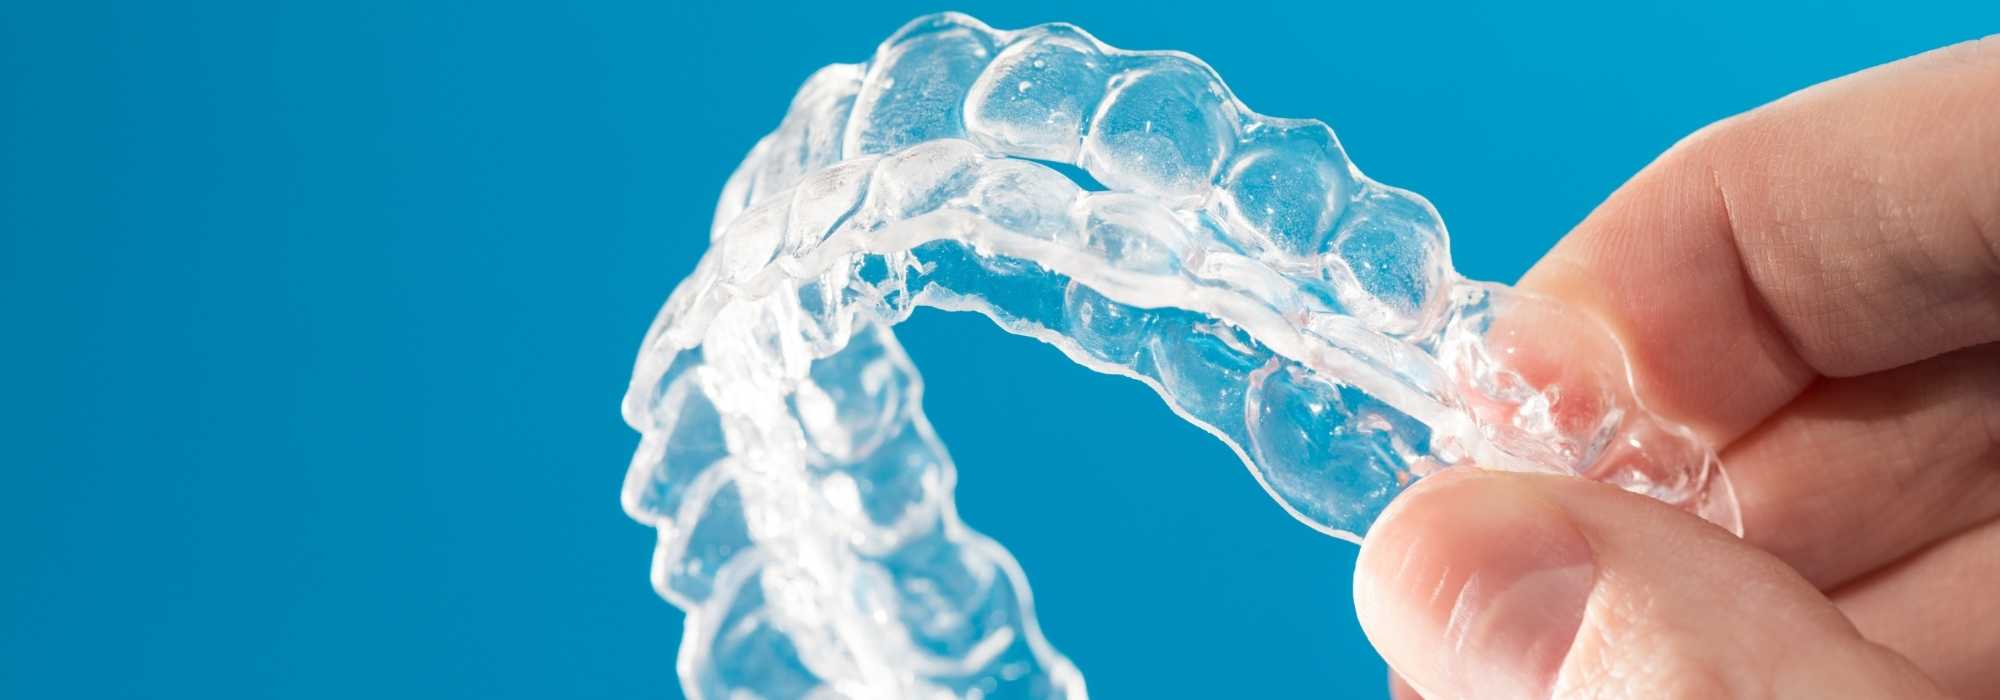 Ortodoncia invisible | Rubal Dental